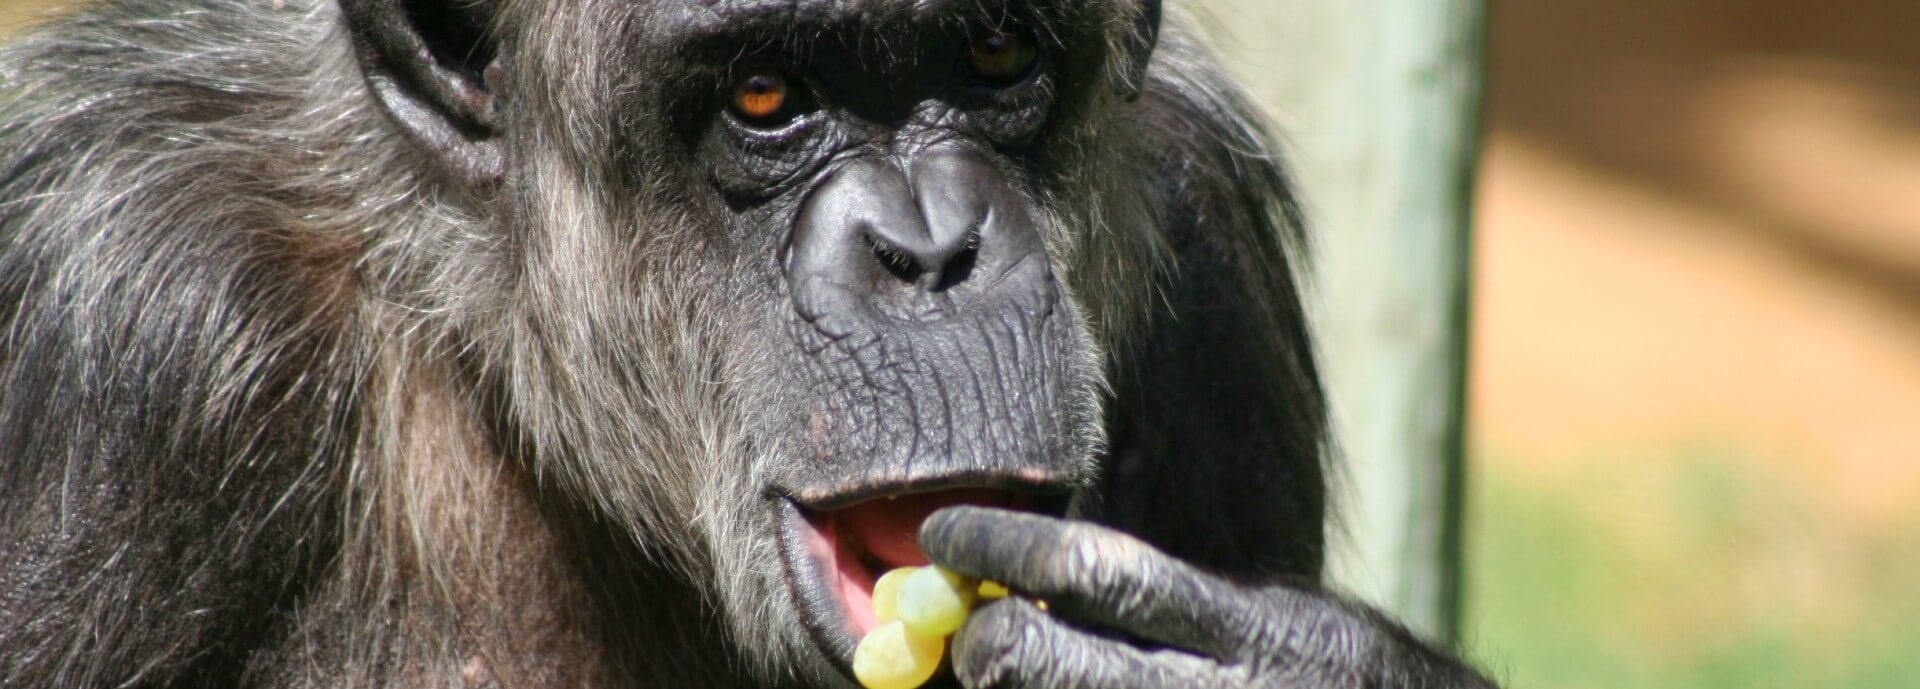 Chimpanzee eating grapes